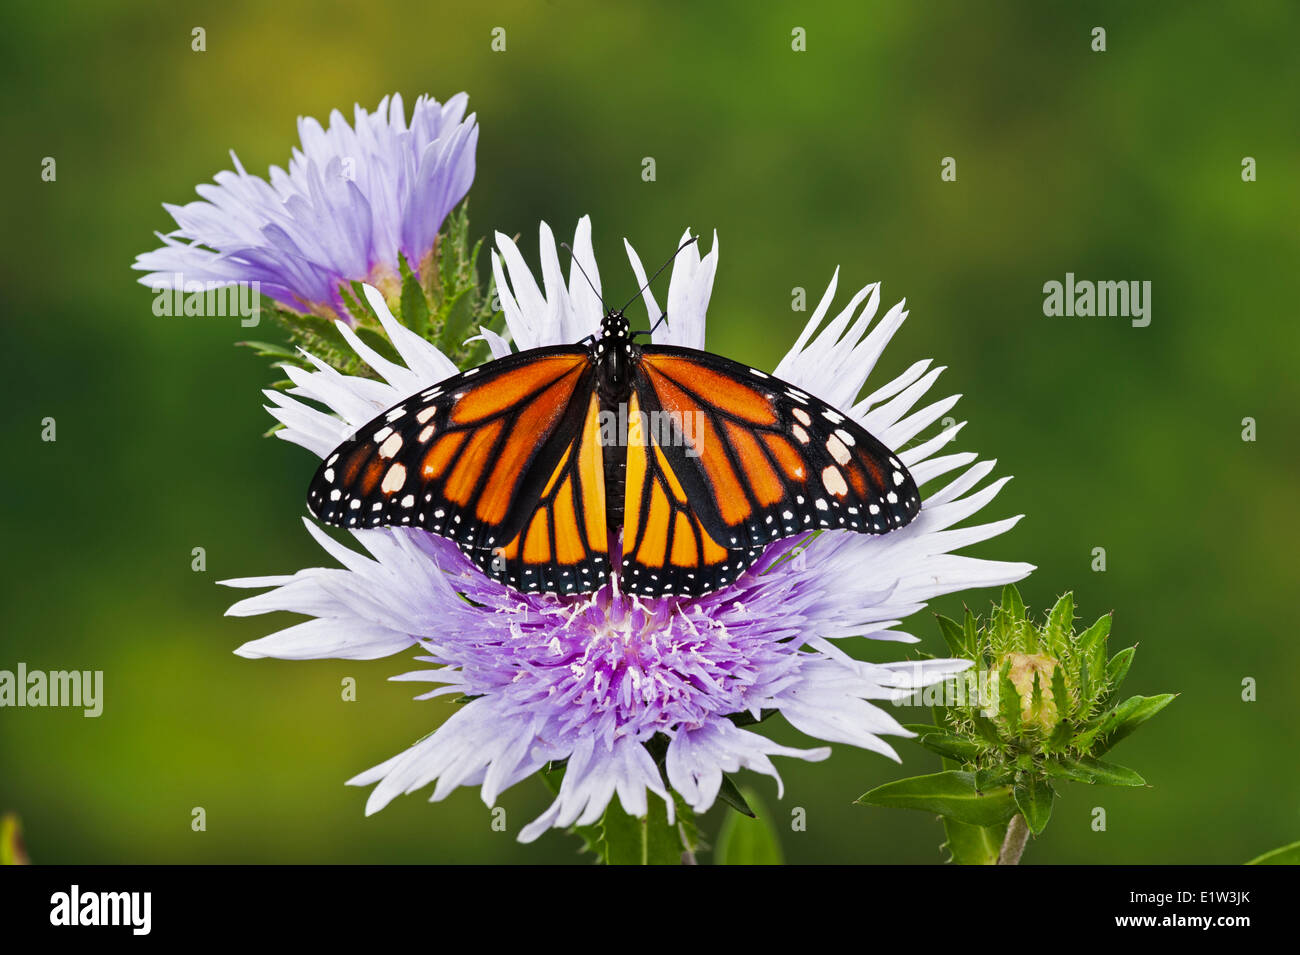 Monarch butterfly (Danaus plexippus) on Stokes' Aster (Stokesia laevis) flowers, summer, North America. Stock Photo